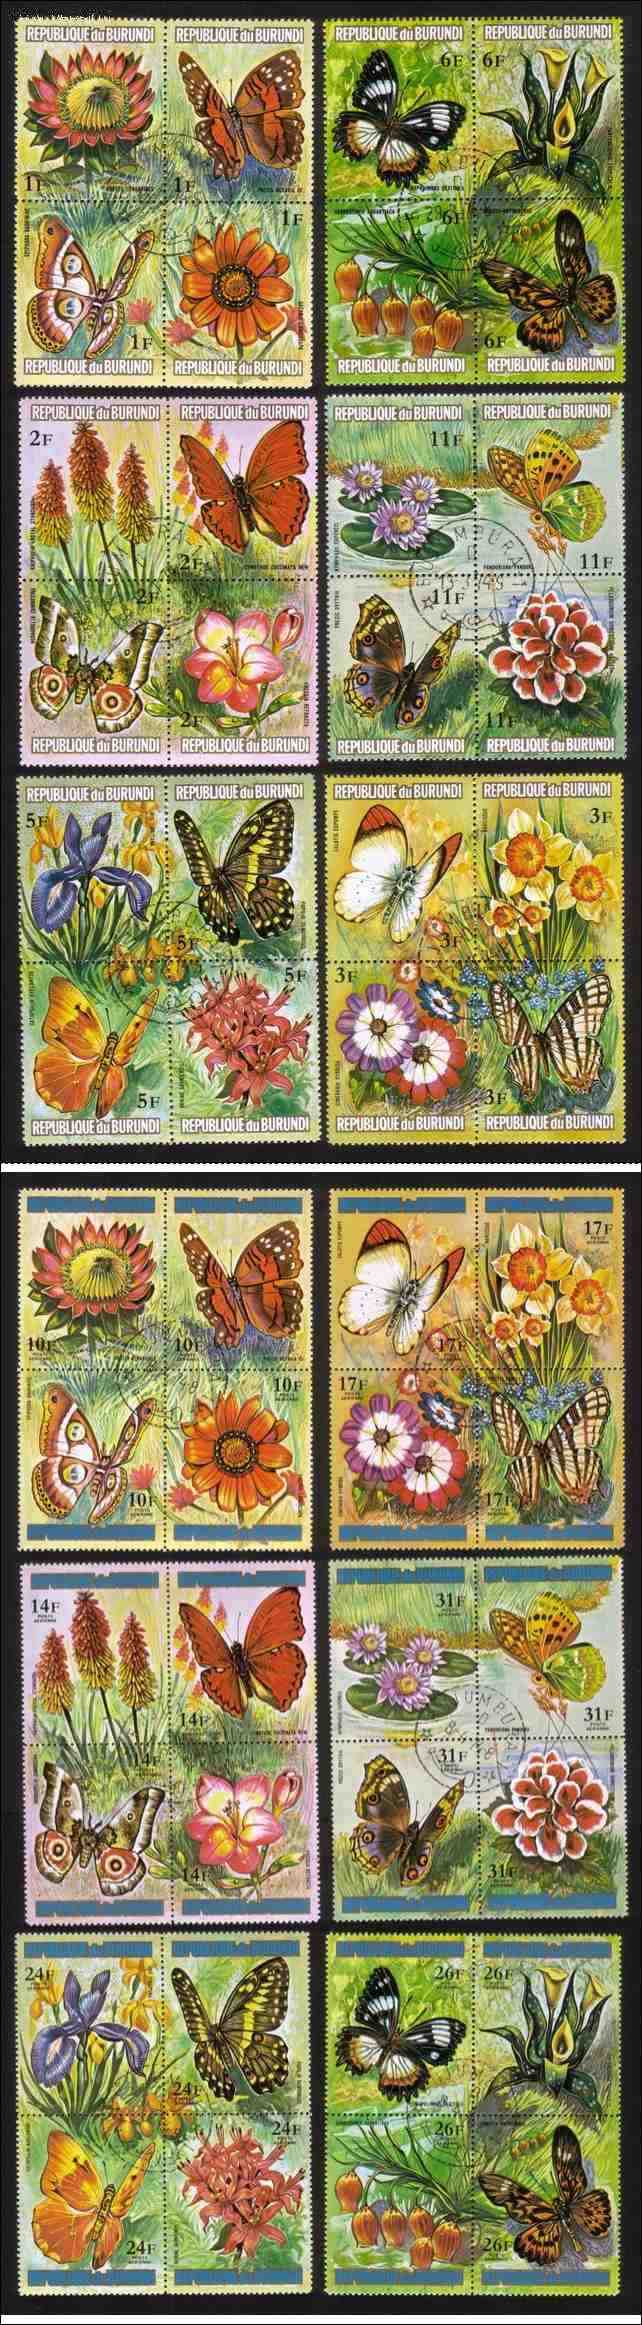 Flowers & Butterflies: Protea Cynaroides, Precis Octavia, Etc. - Complete Set of 48 Different